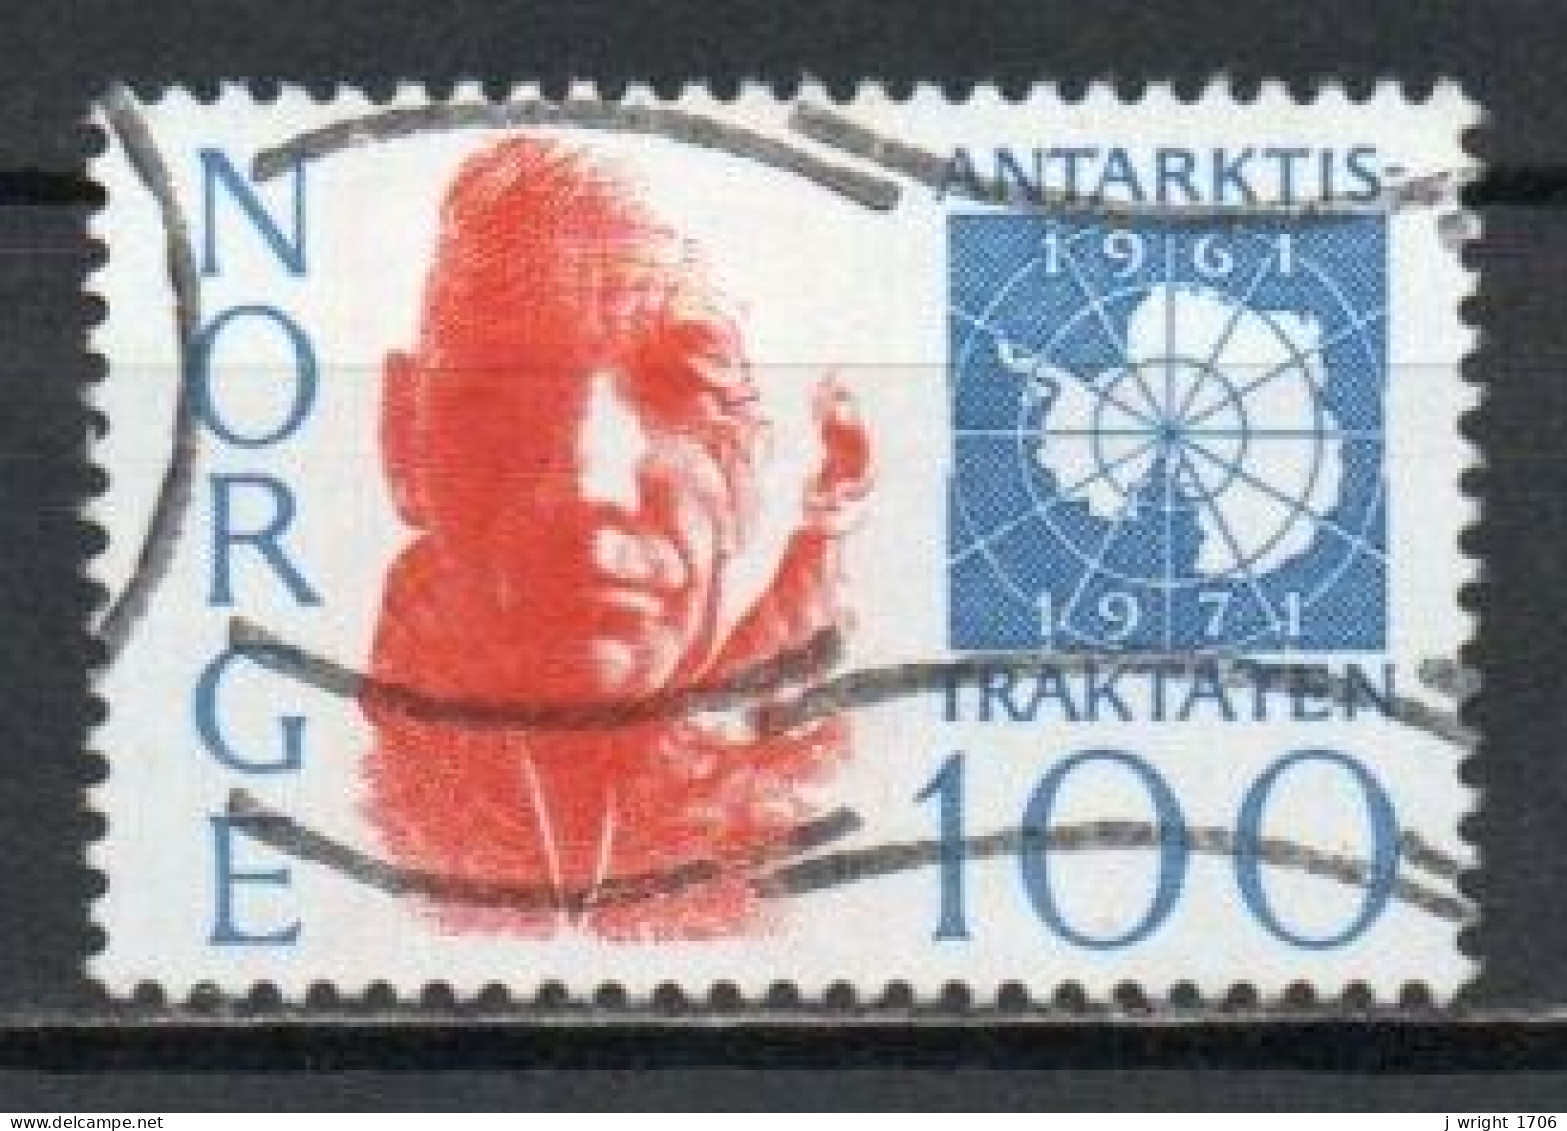 Norway, 1971, Antartic Treaty 10th Anniv, 100ö, USED - Usati